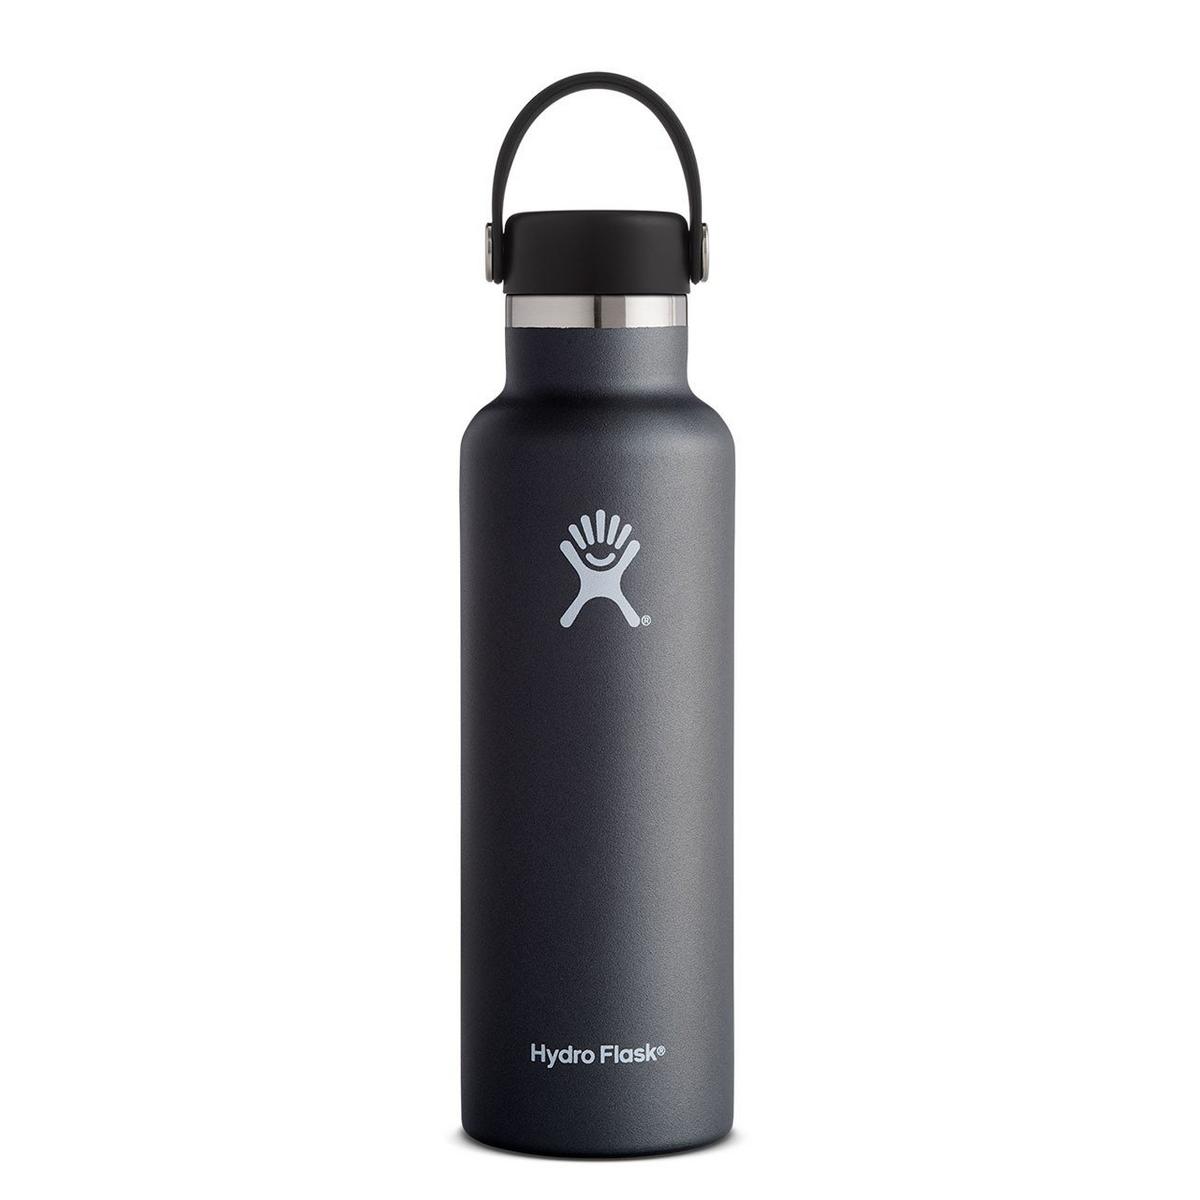 Hydro Flask 21oz / 0.6 L Standard Mouth Bottle - Black